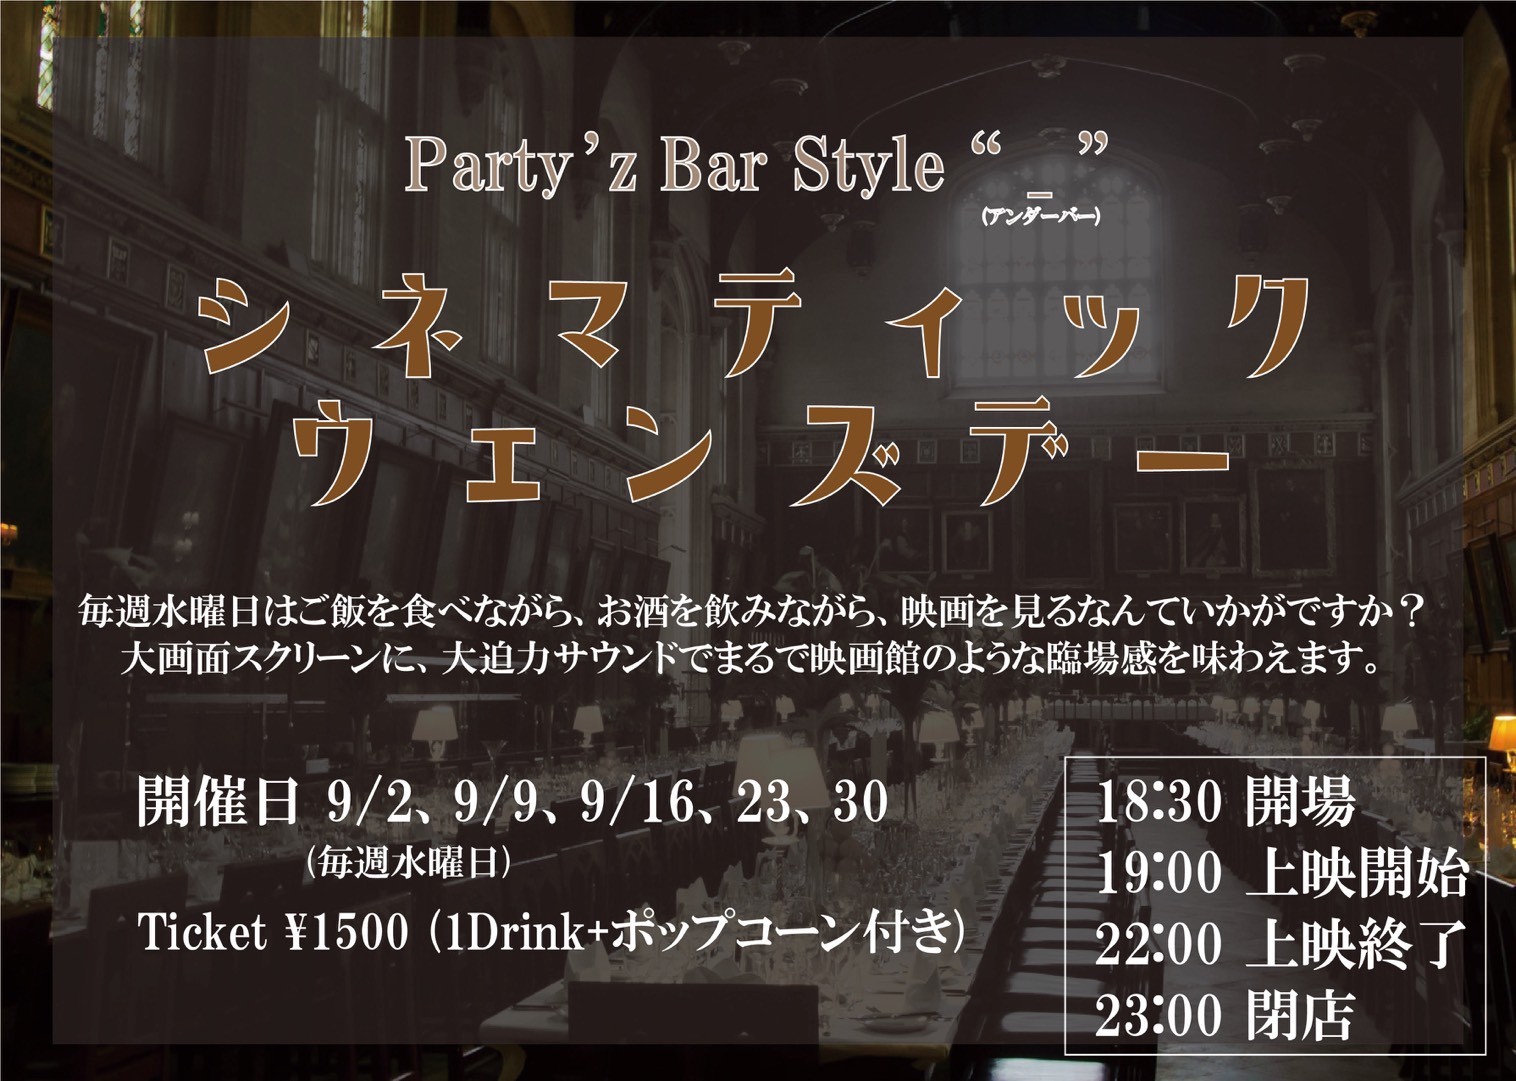 Party'z Bar Style "_" シネマティックウェンズデー